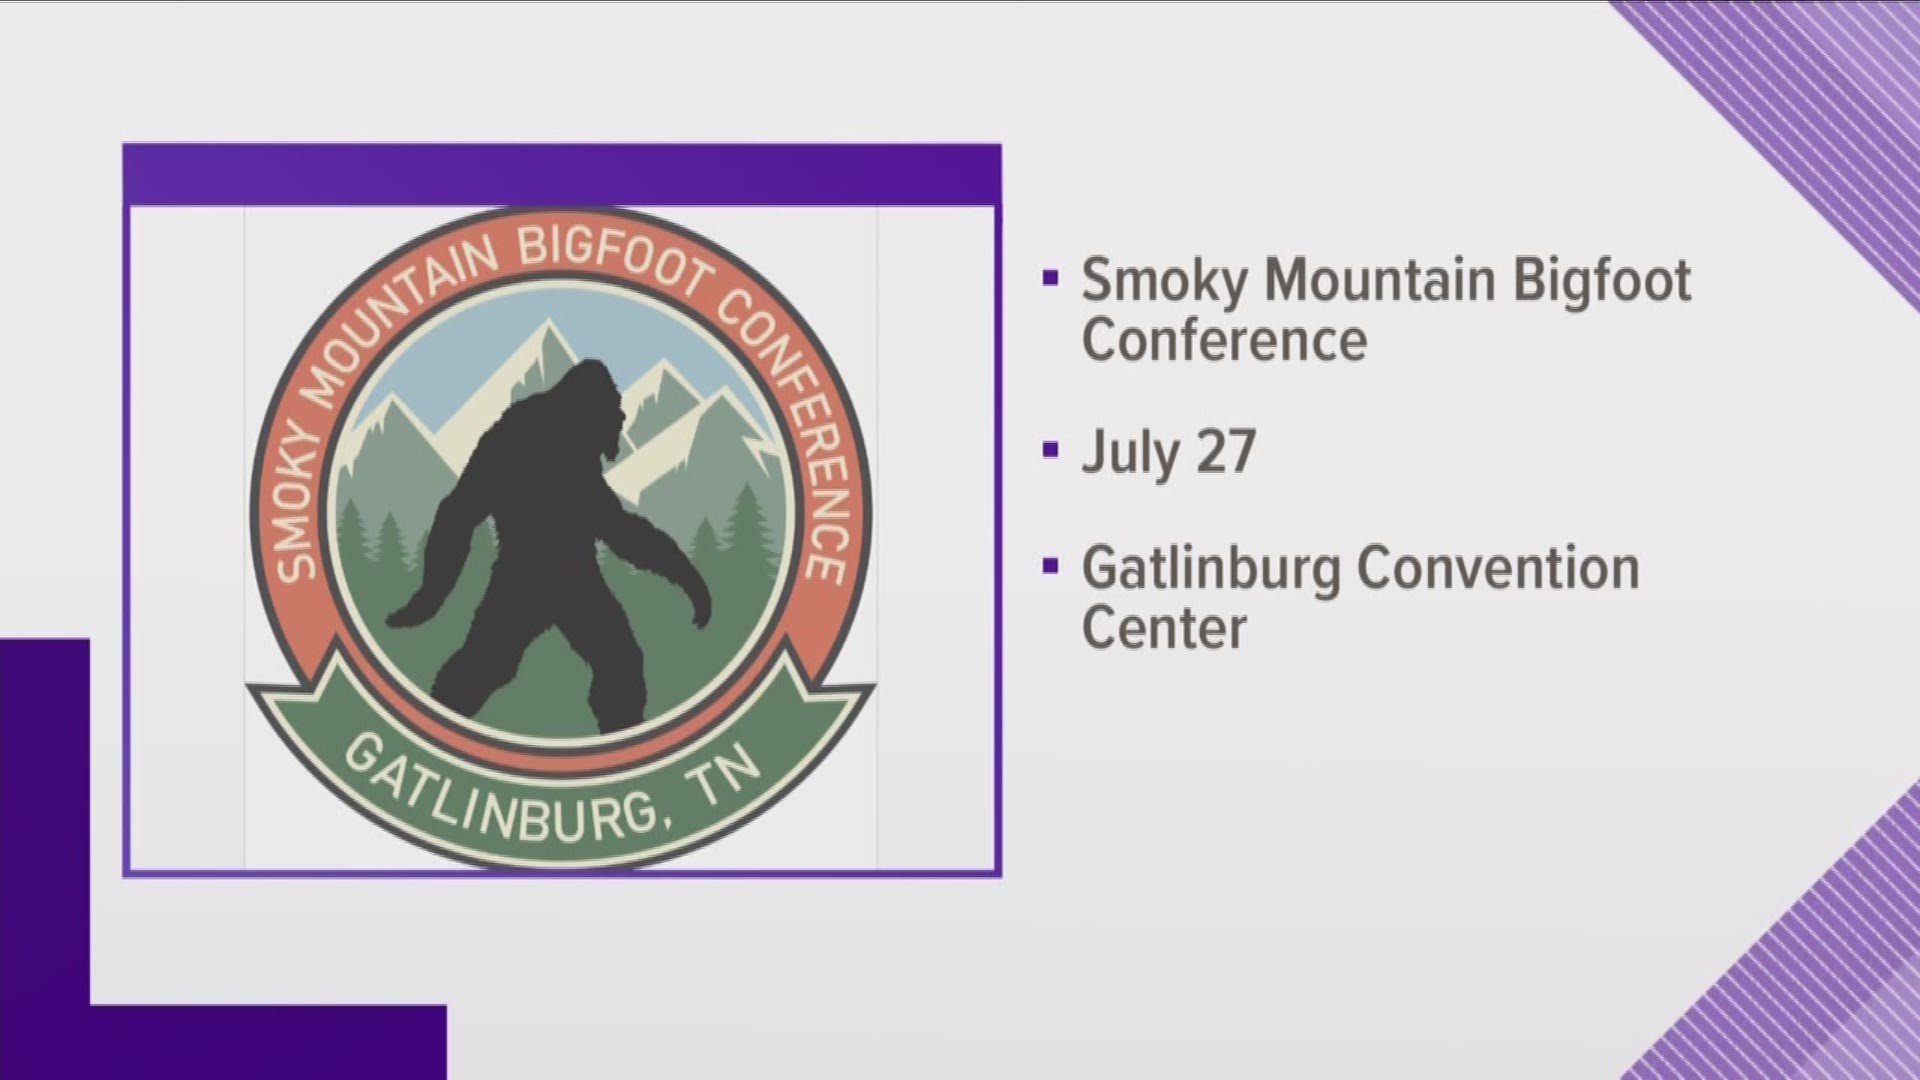 Smoky Mountain Bigfoot Conference coming to Gatlinburg July 27